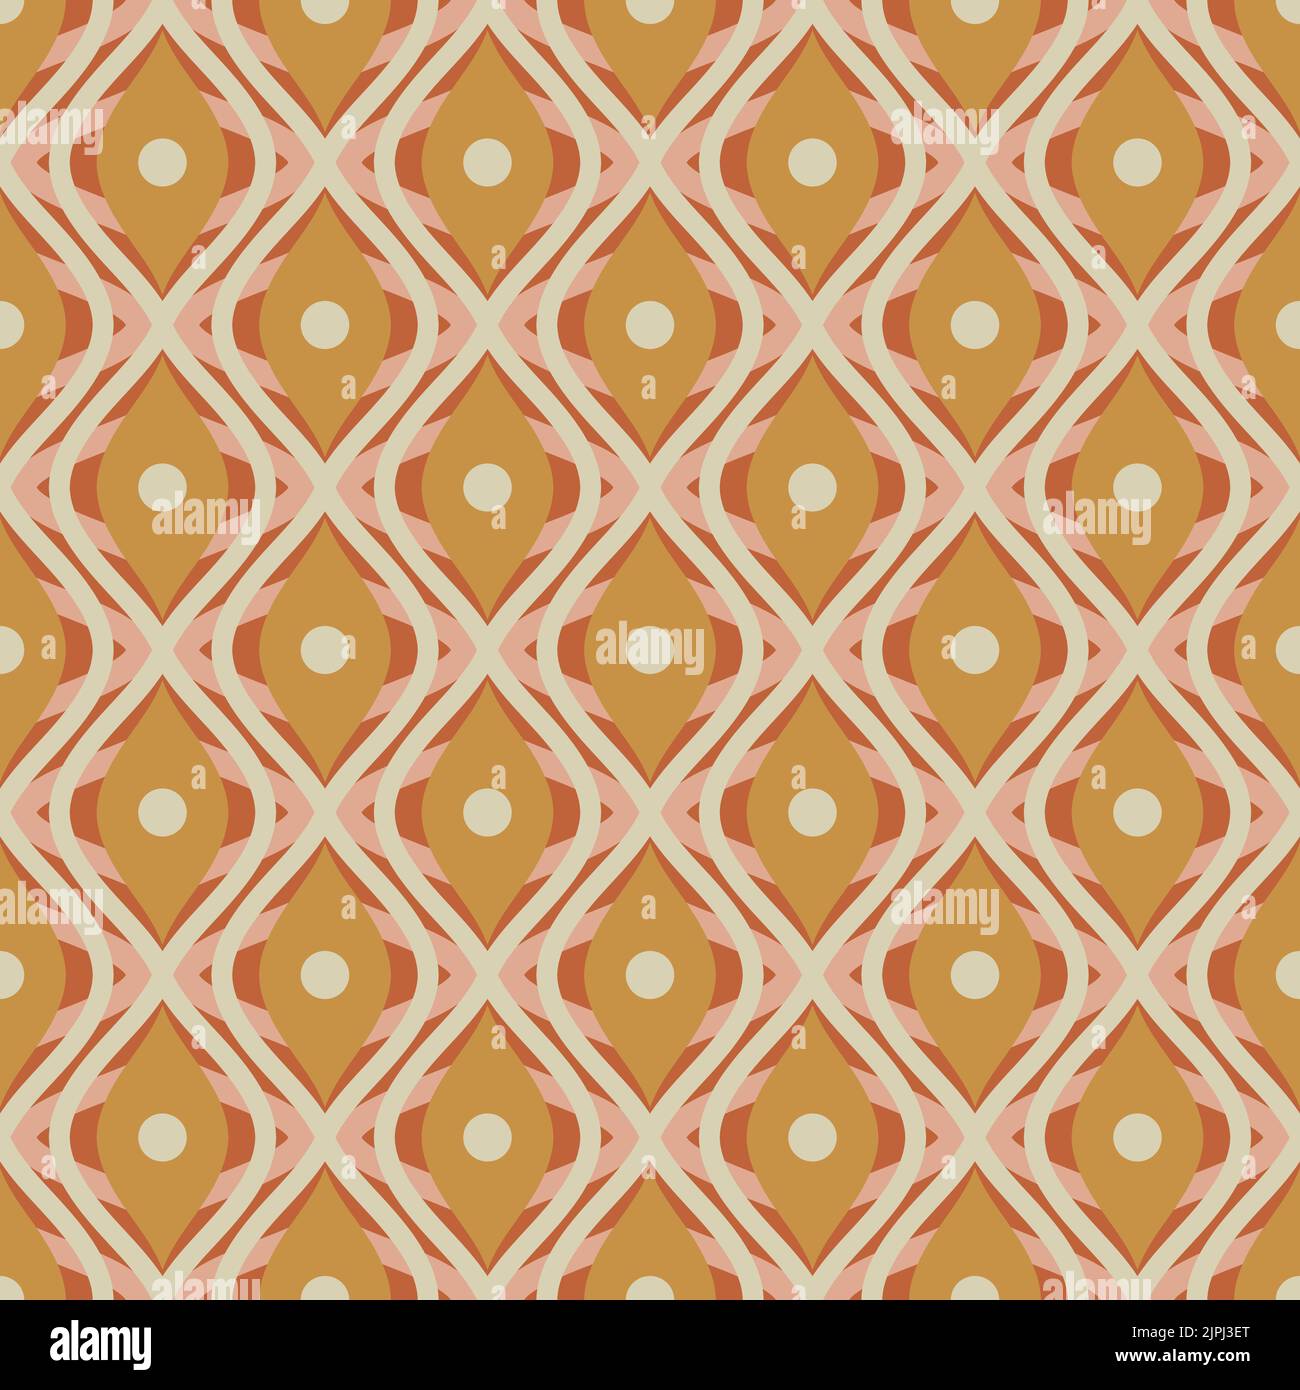 70 s seamless pattern. Retro geometric seamless background in seventies style. Groovy scrapbook paper. Yellow, orange, beige vintage colors vector pat Stock Vector